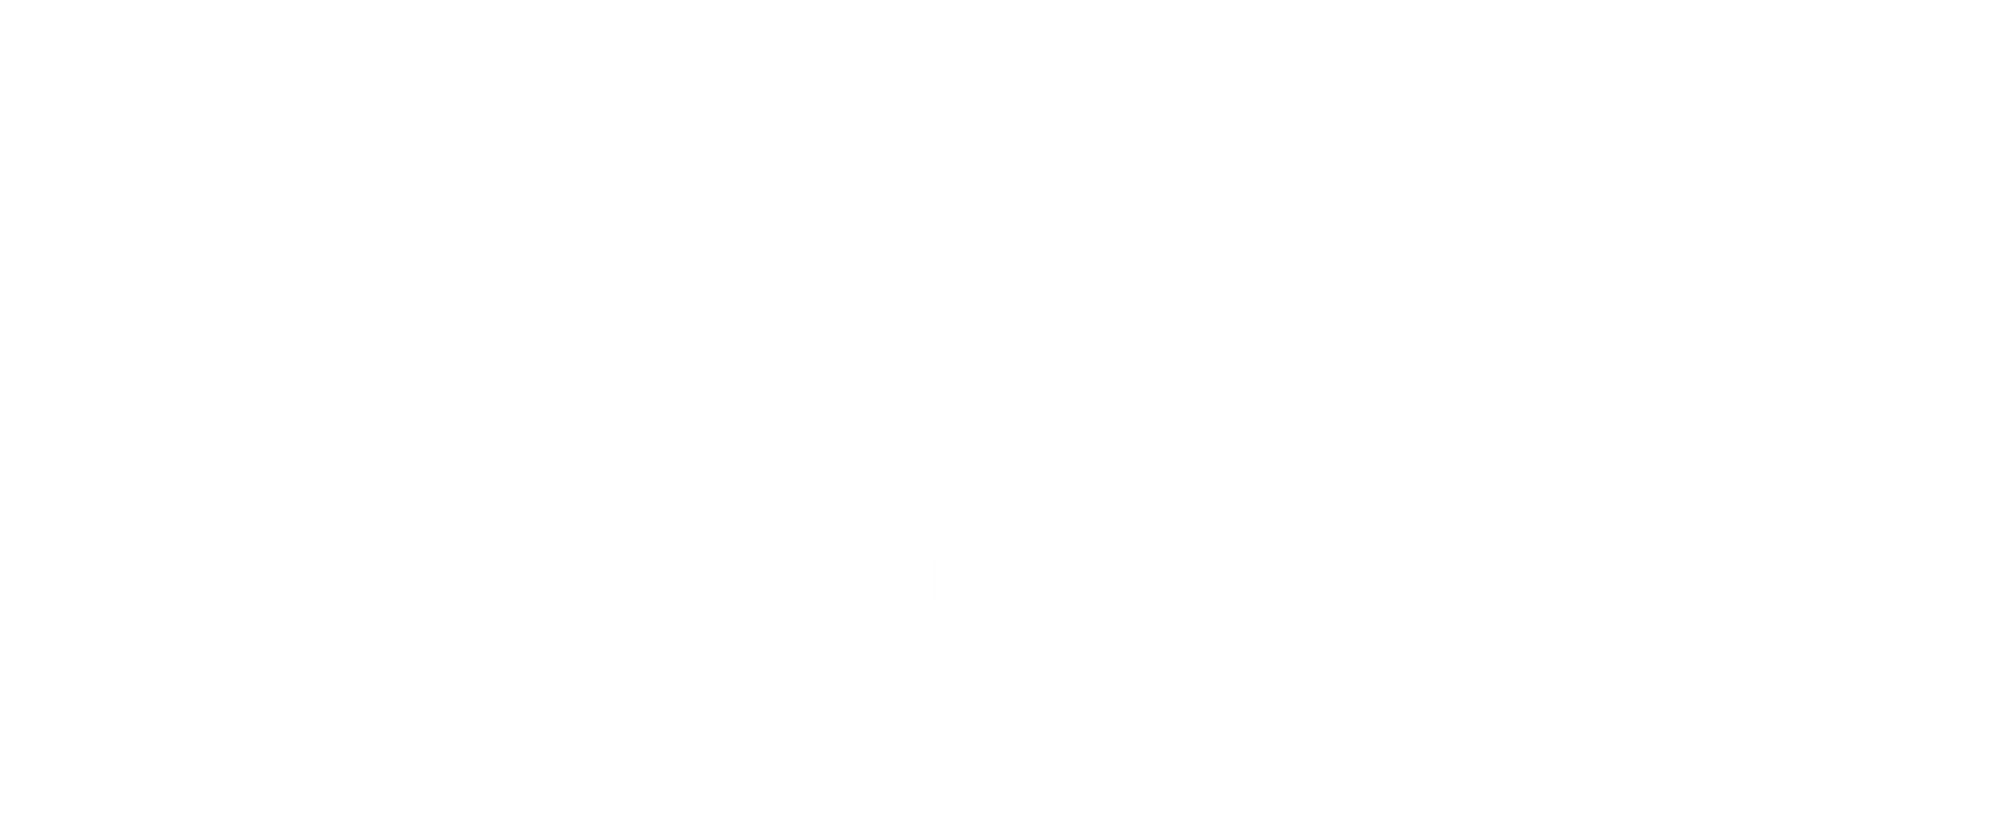 Hotel Art by the Spanish Steps UNA Esperienze